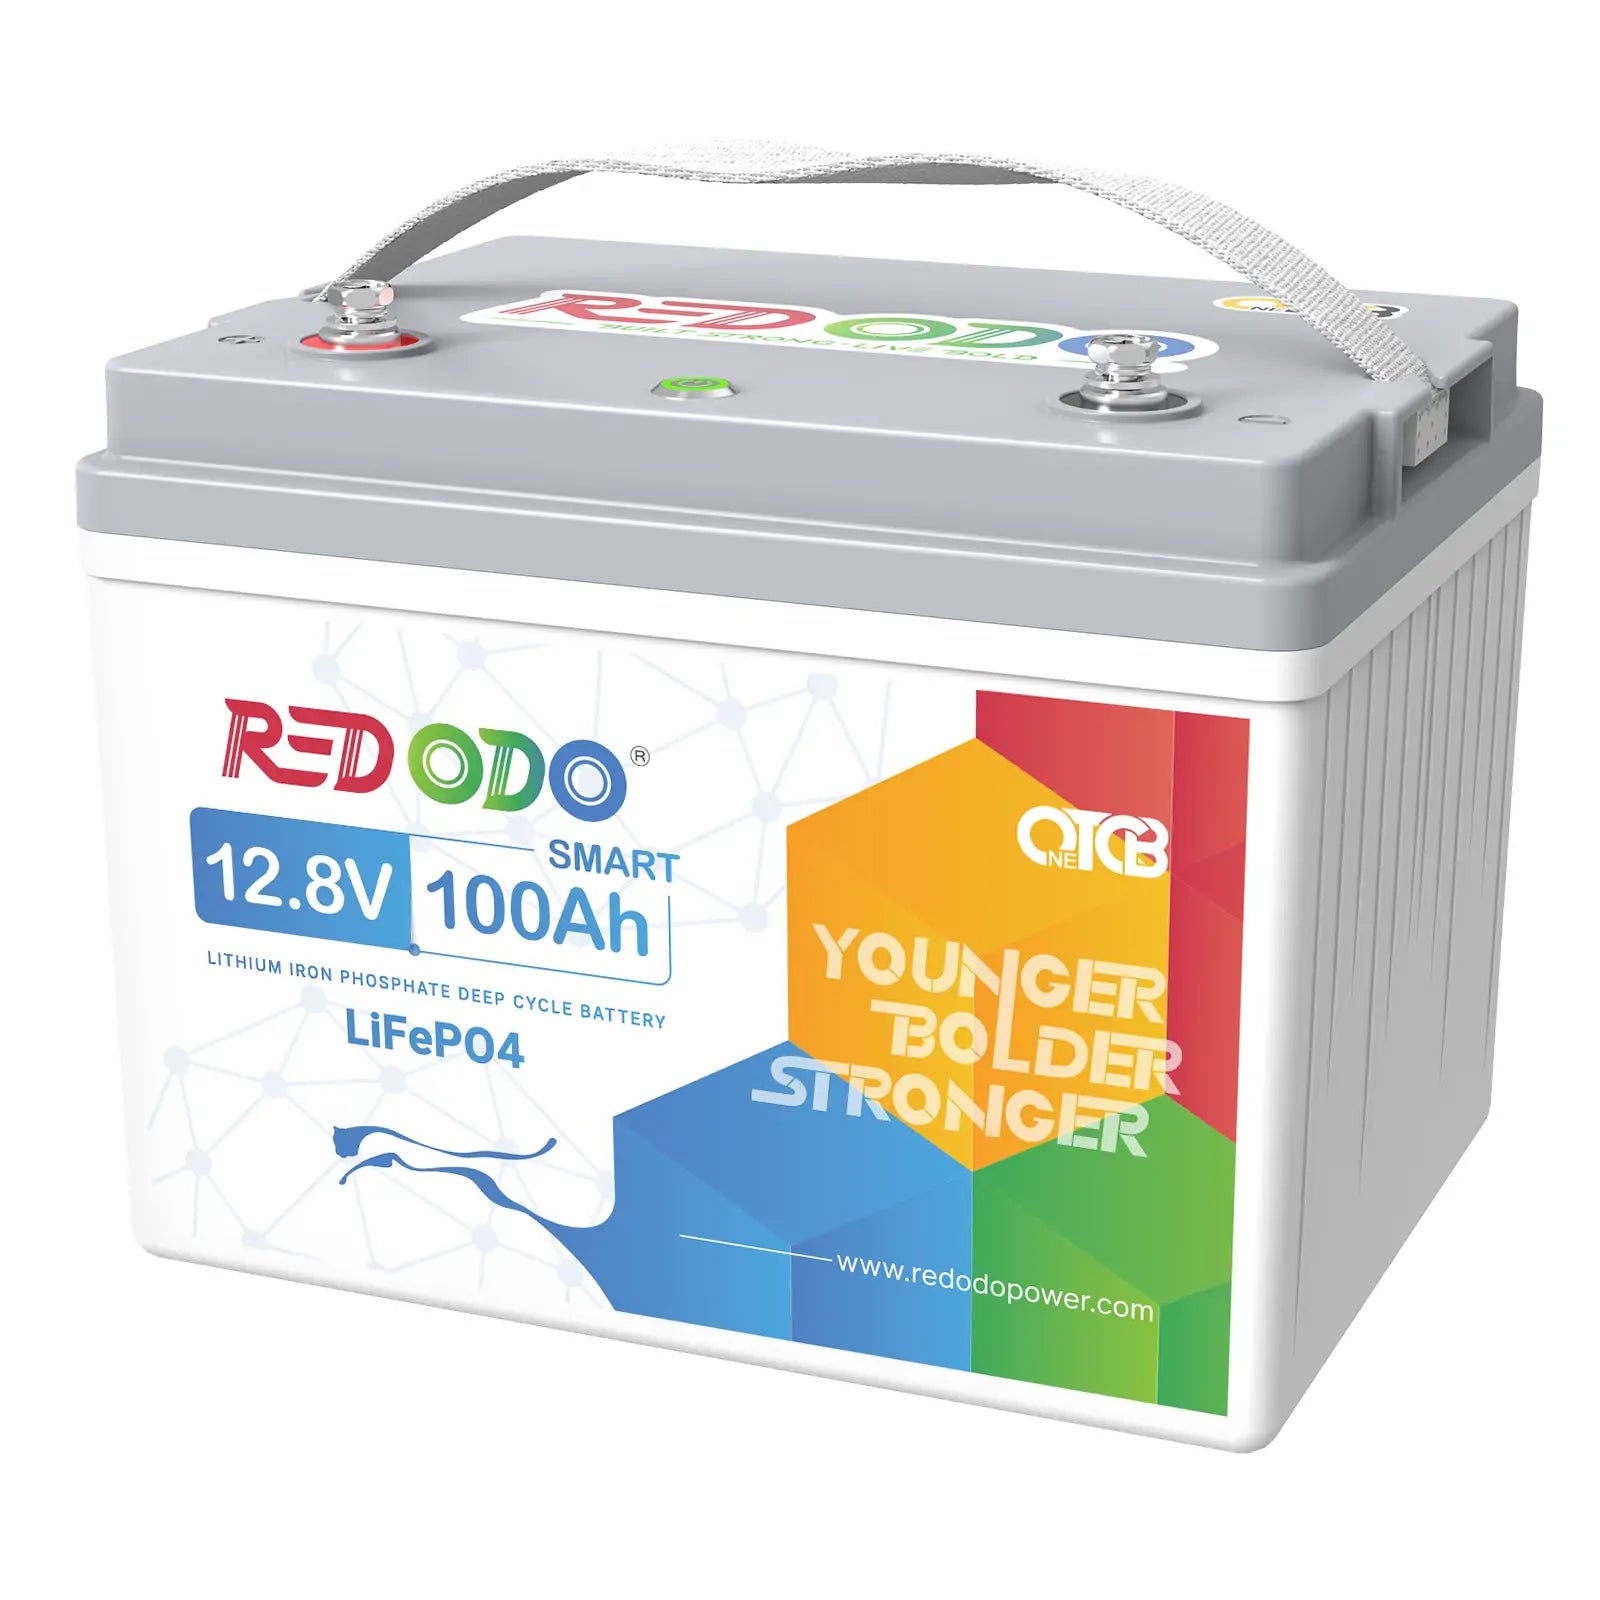 Redodo 12.8V 100Ah Smart LiFePO4 Battery | 1.28kWh & 1.28kW Redodo